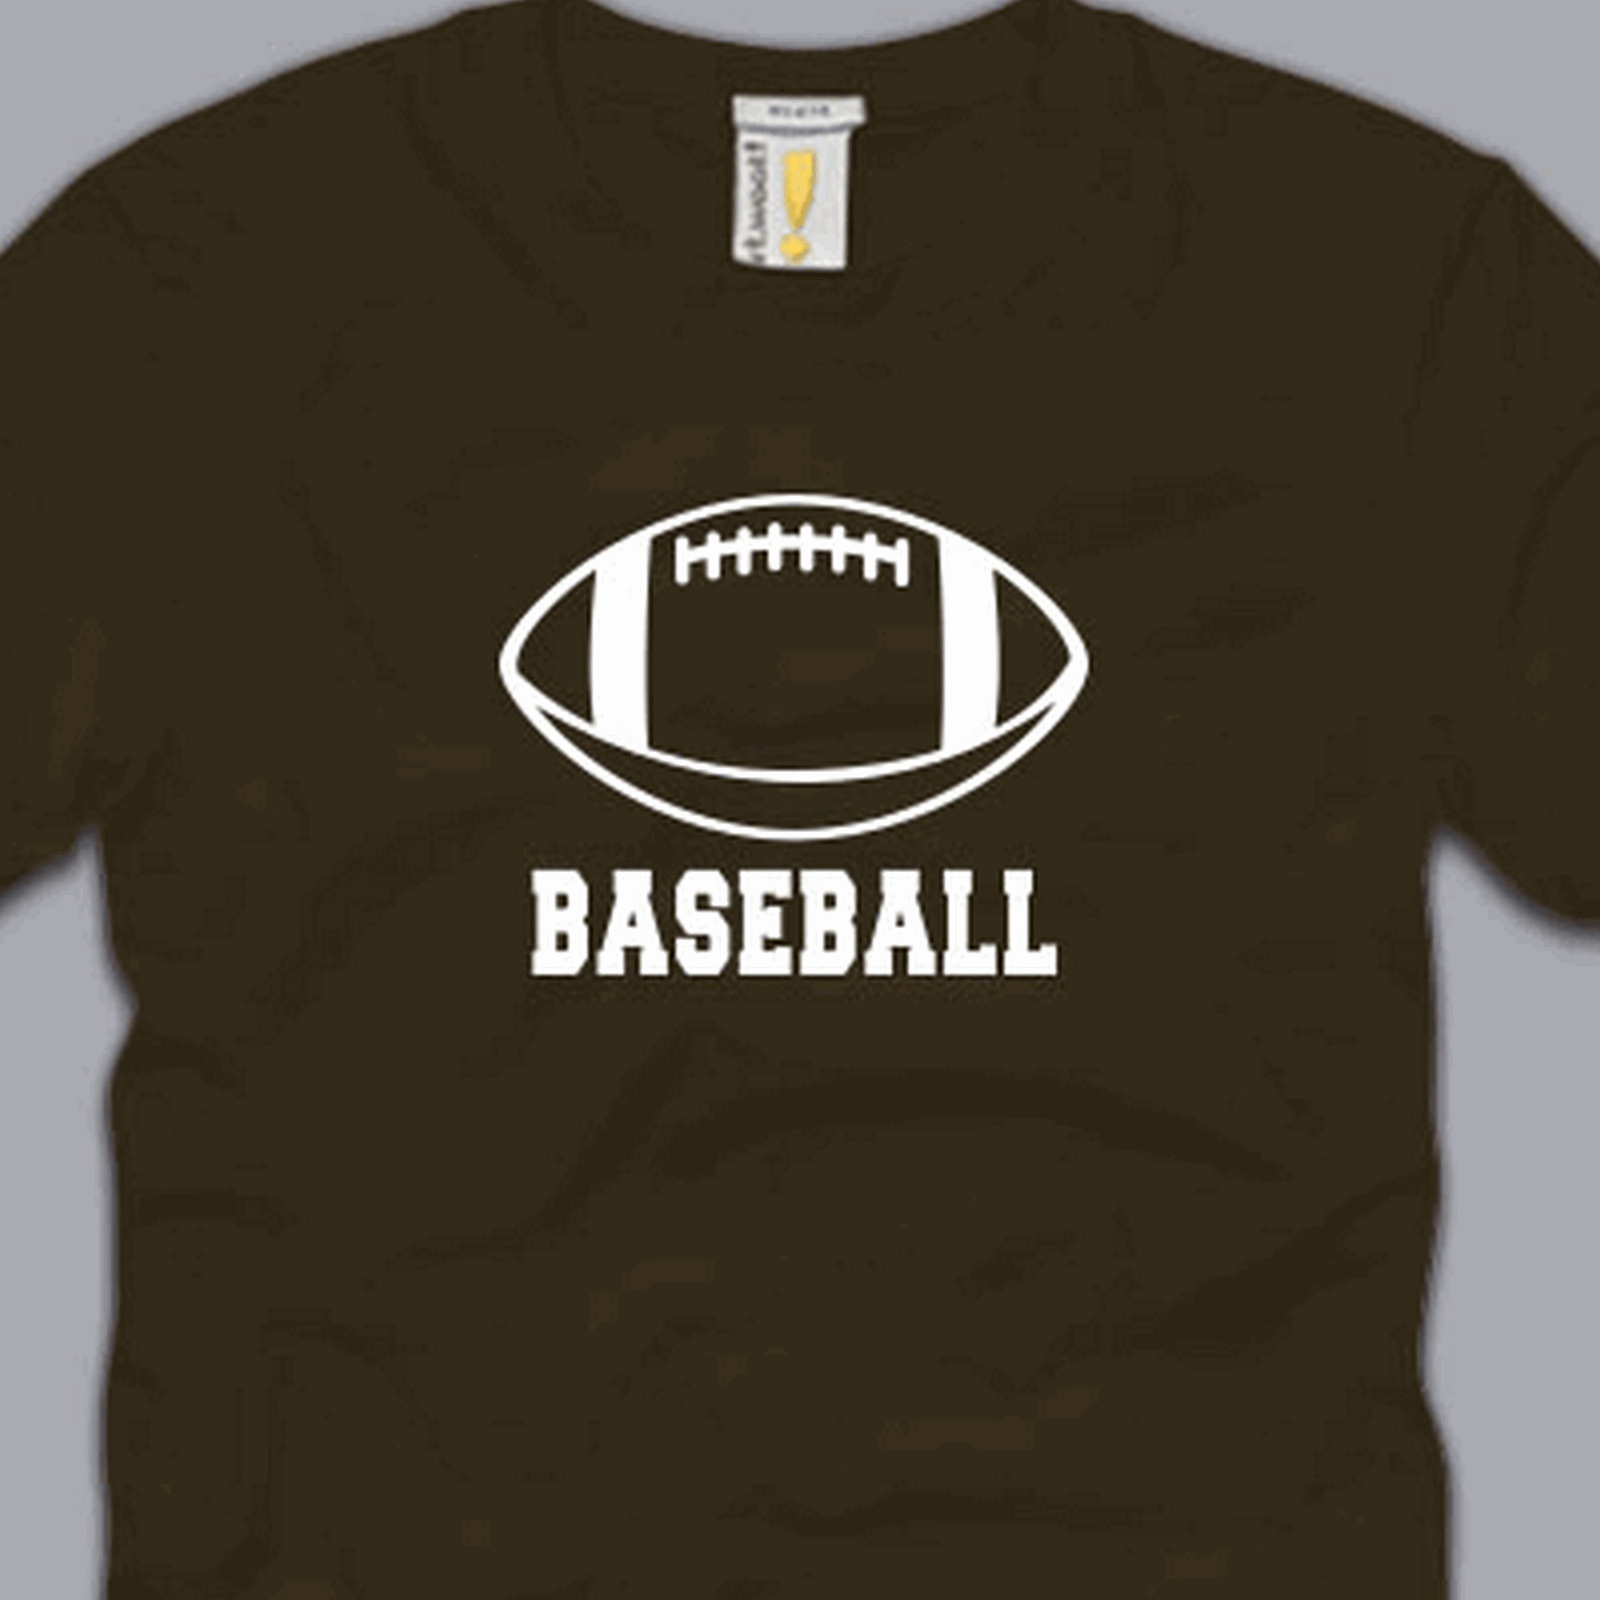 Football Baseball 2XL T Shirt Funny Humor Awesome Nerd Cool Sports Tee XXL